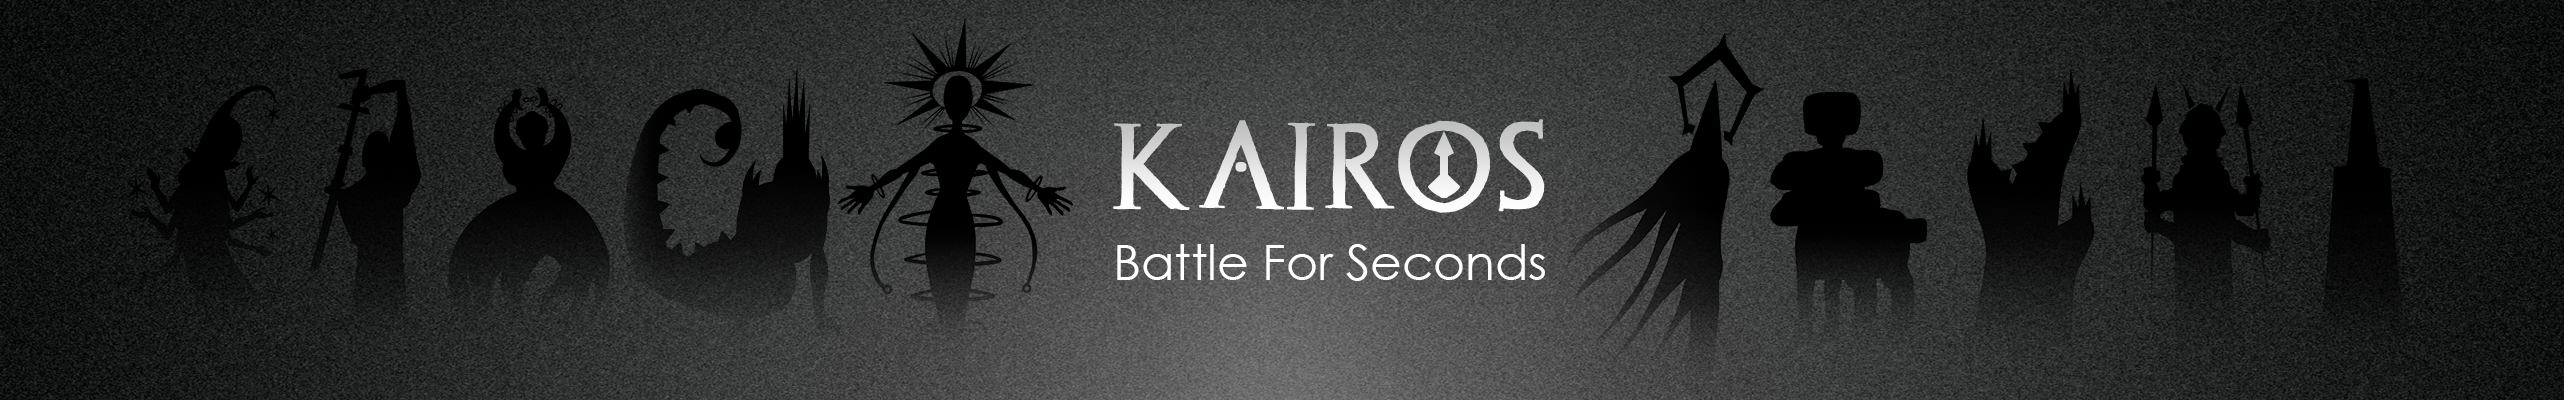 KAIROS, Battle for Seconds